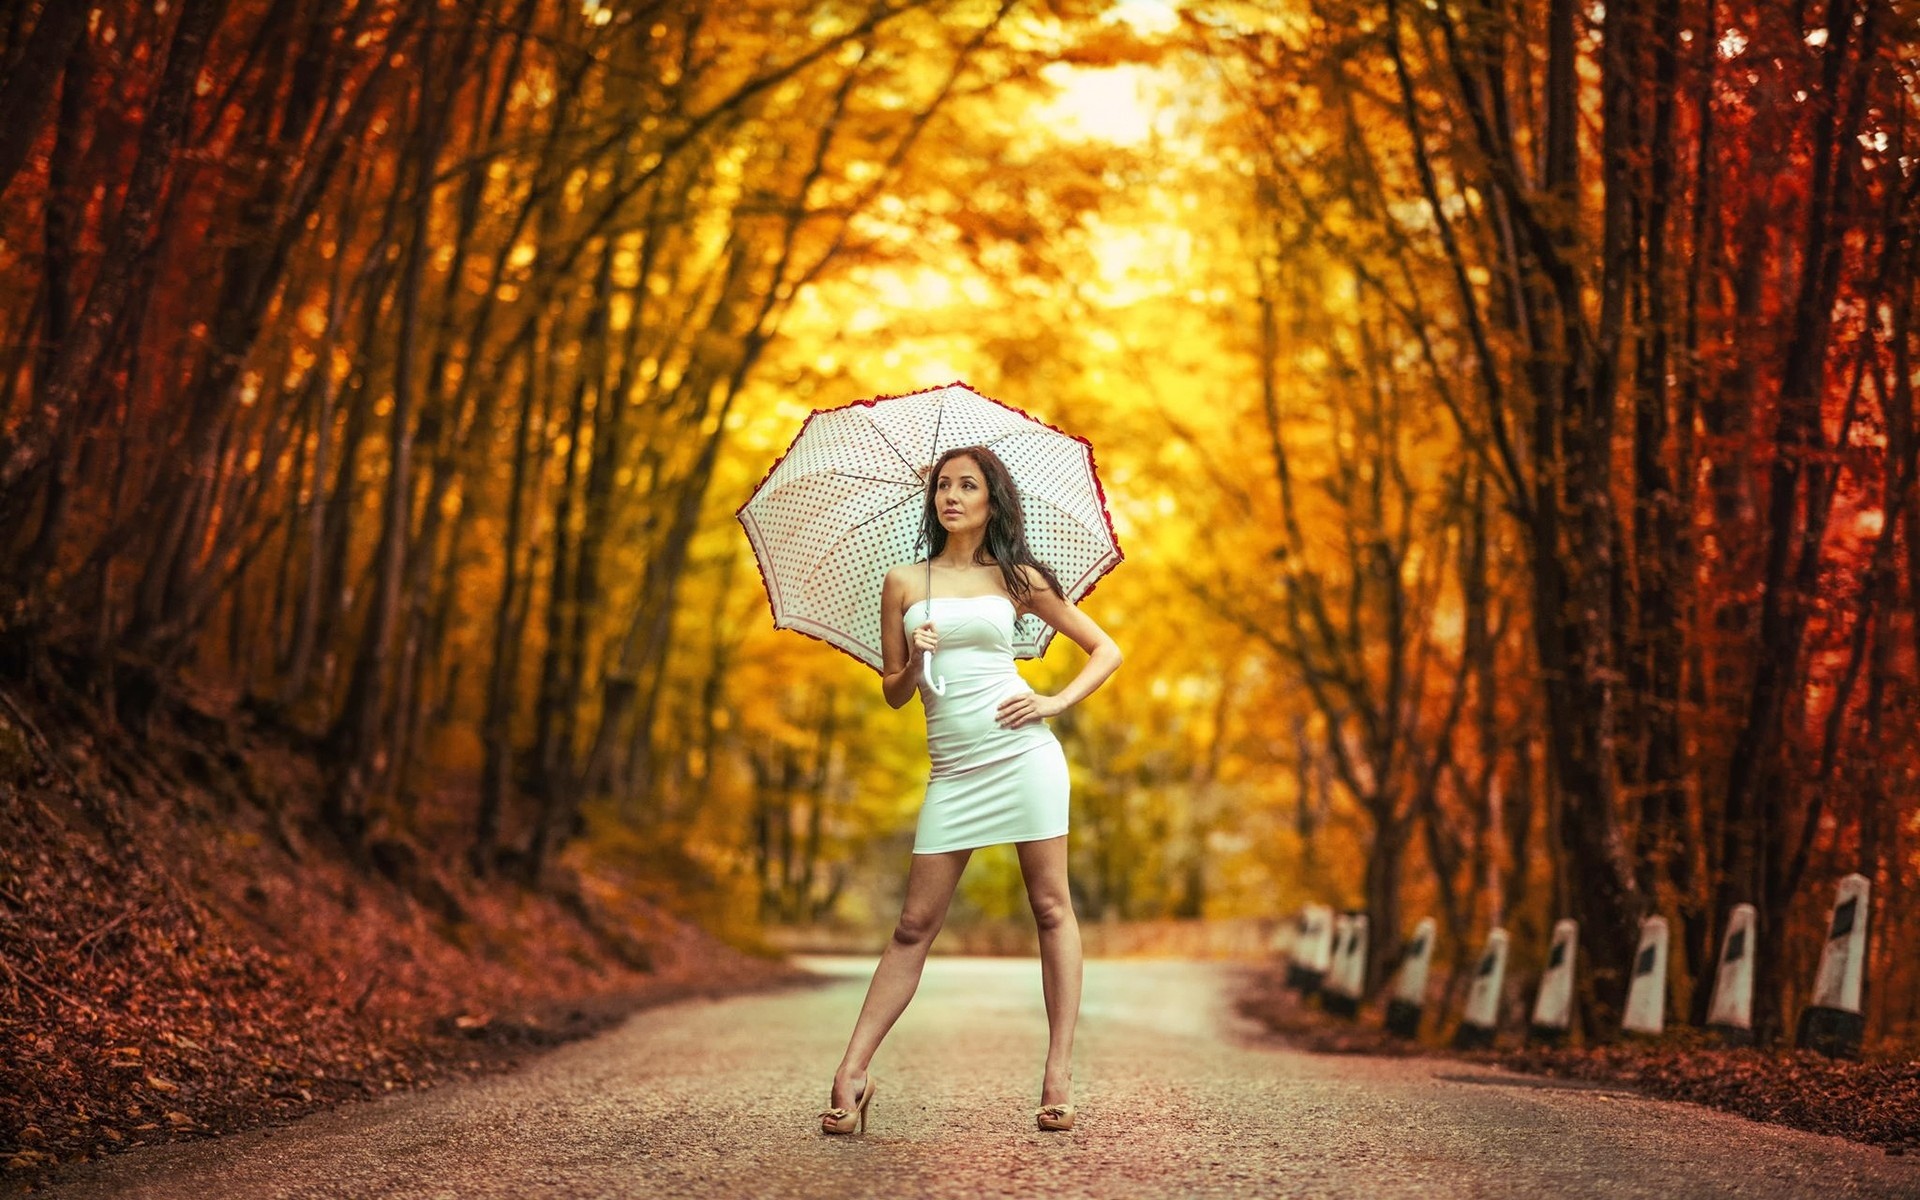 Women Model Long Hair Women Outdoors Trees White Dress Road Leaves Fall High Heels Umbrella